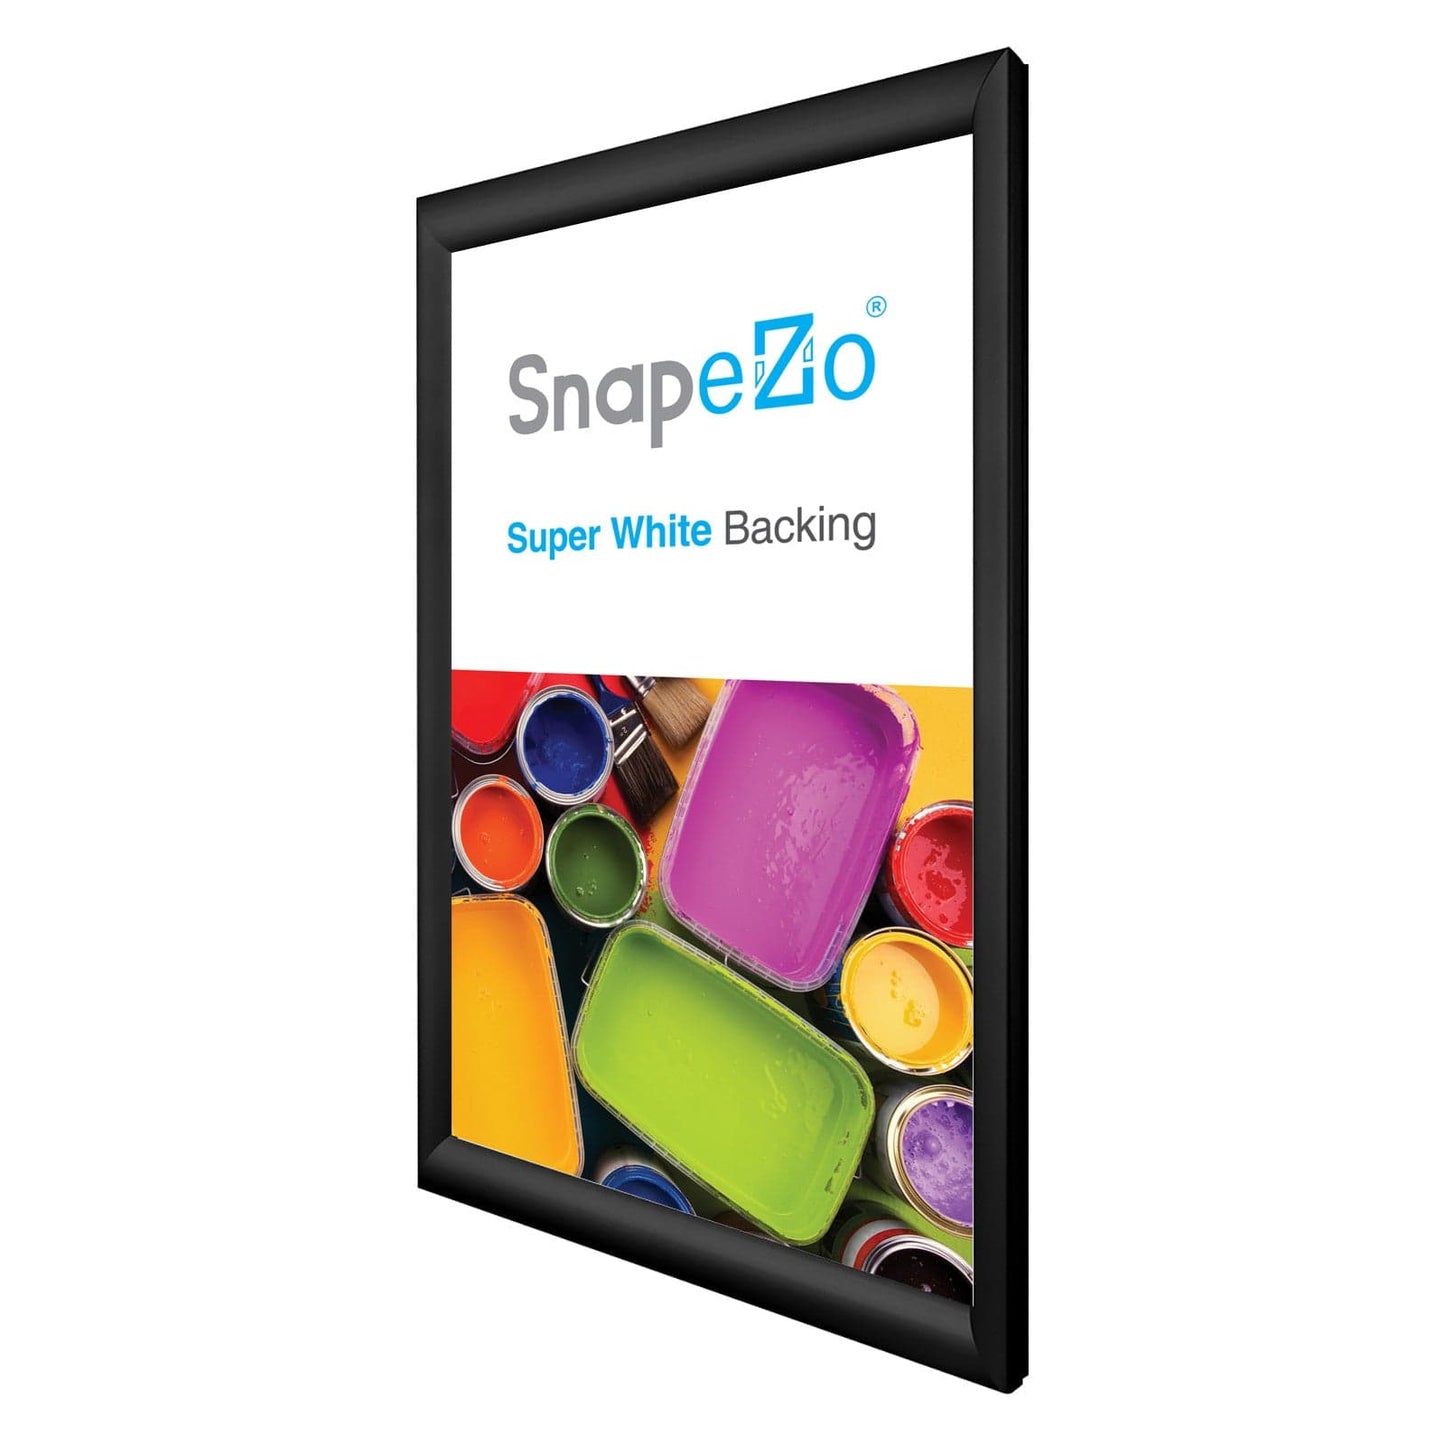 15x25 Black SnapeZo® Snap Frame - 1.2" Profile - Snap Frames Direct